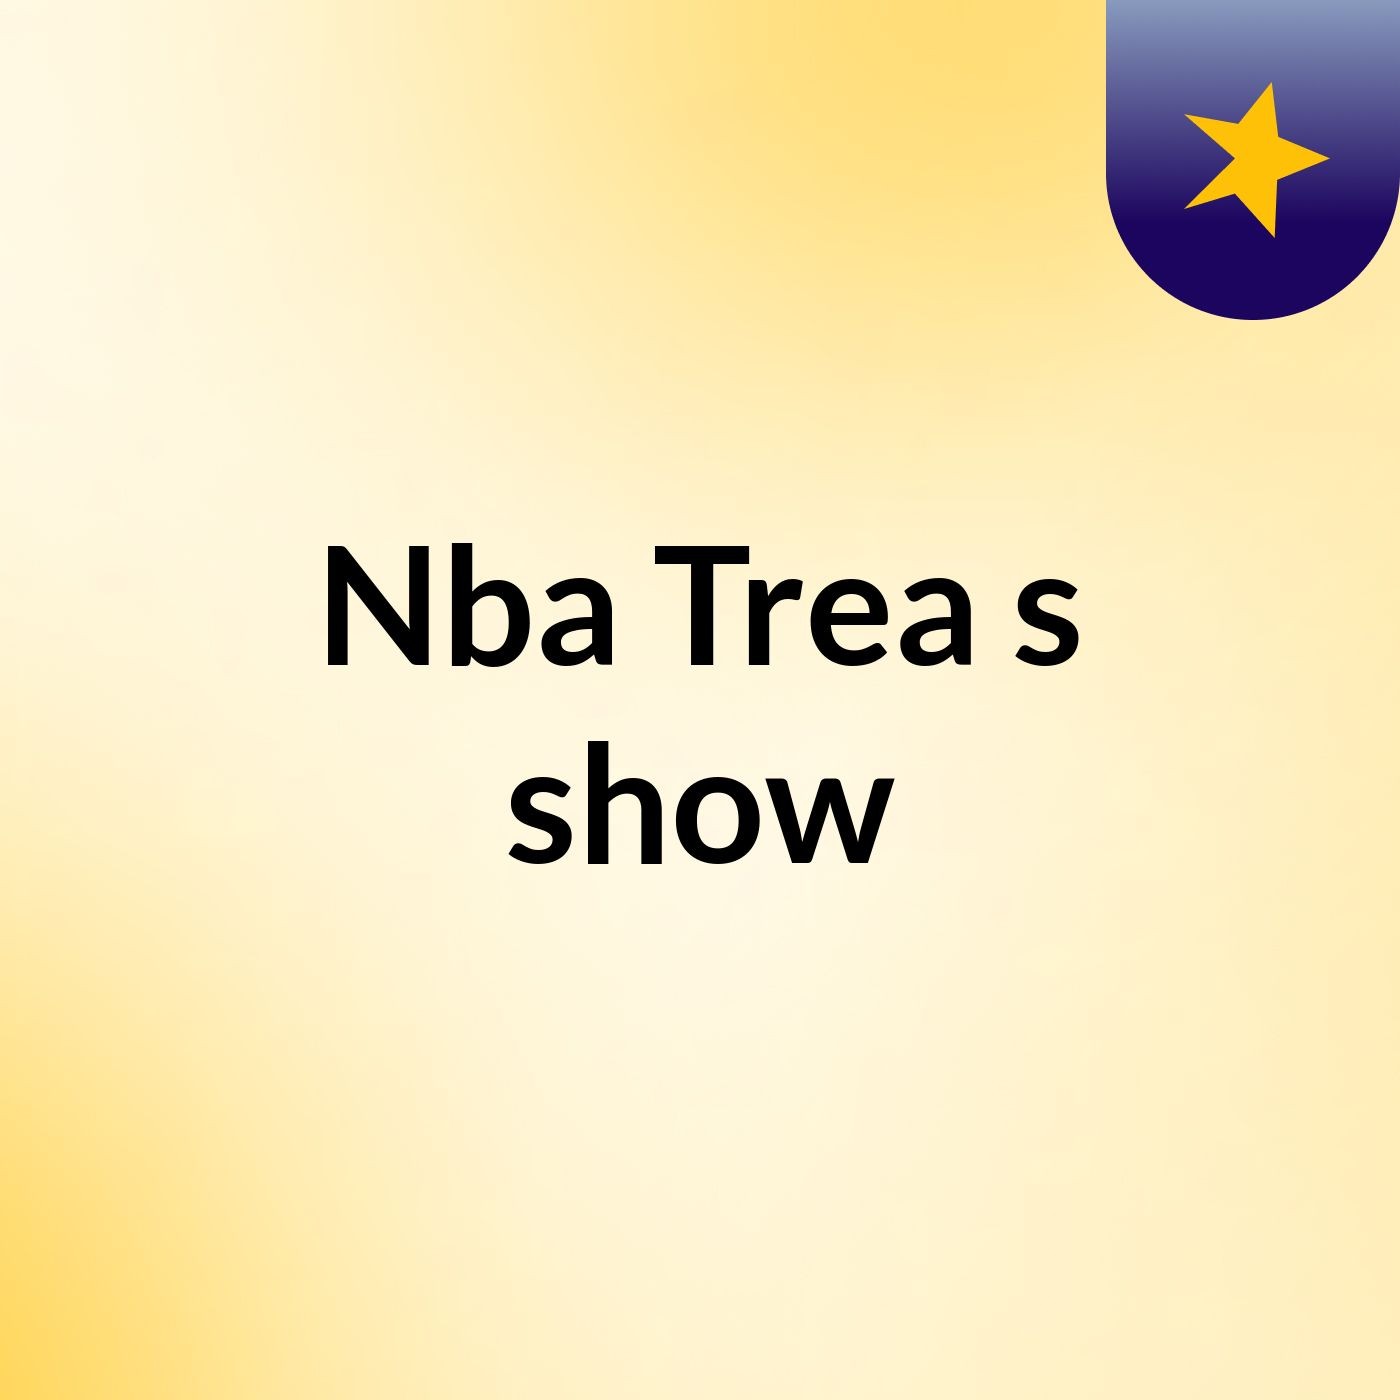 Nba Trea's show